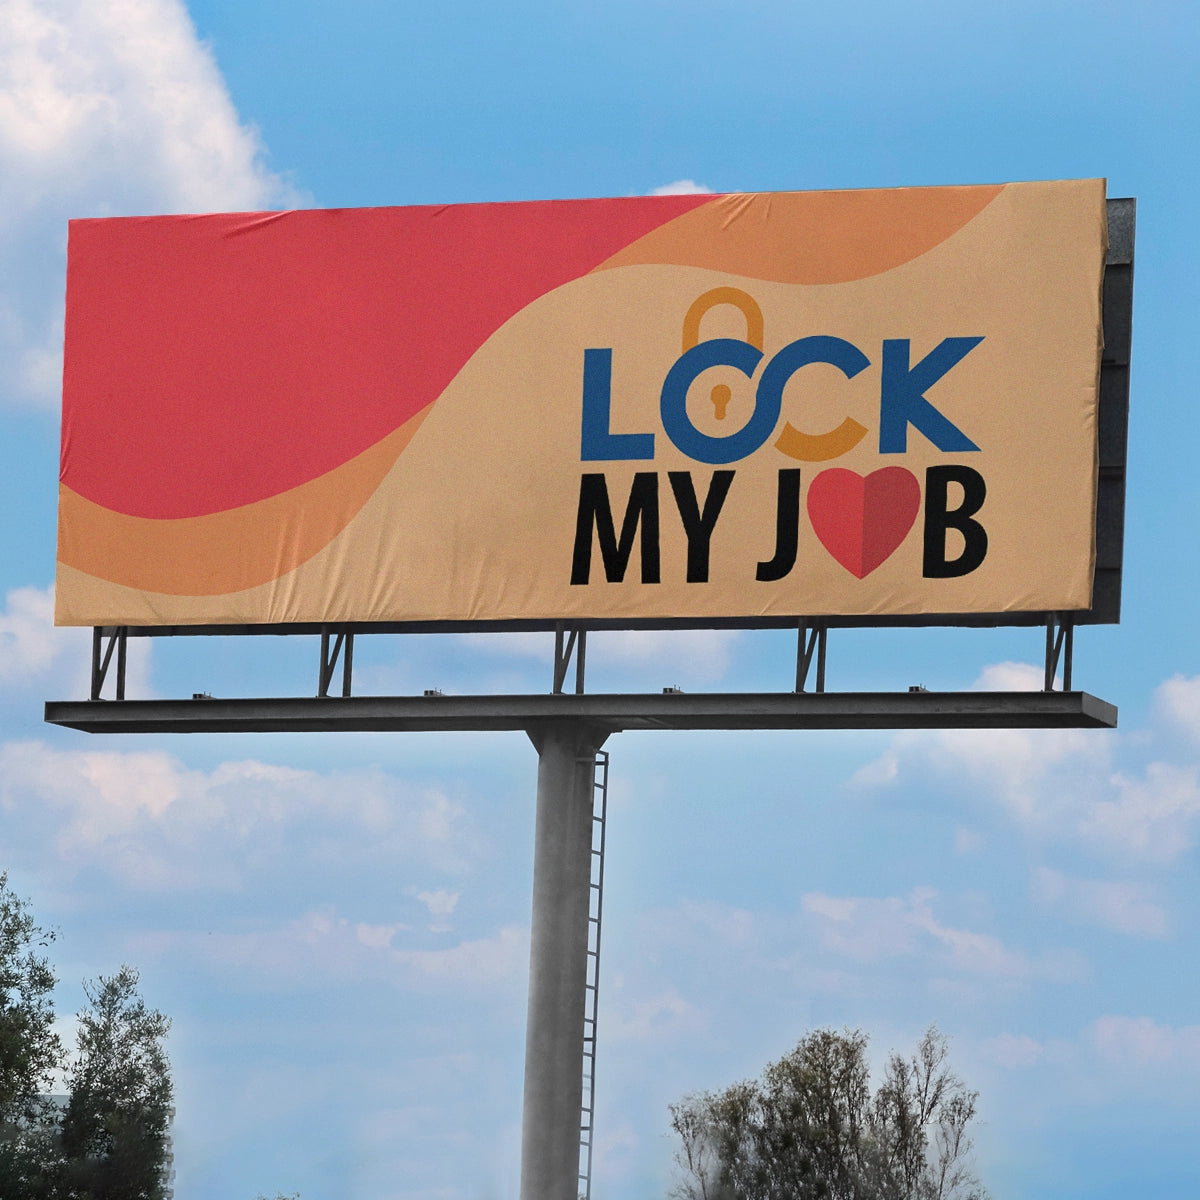 lockmyjob.com